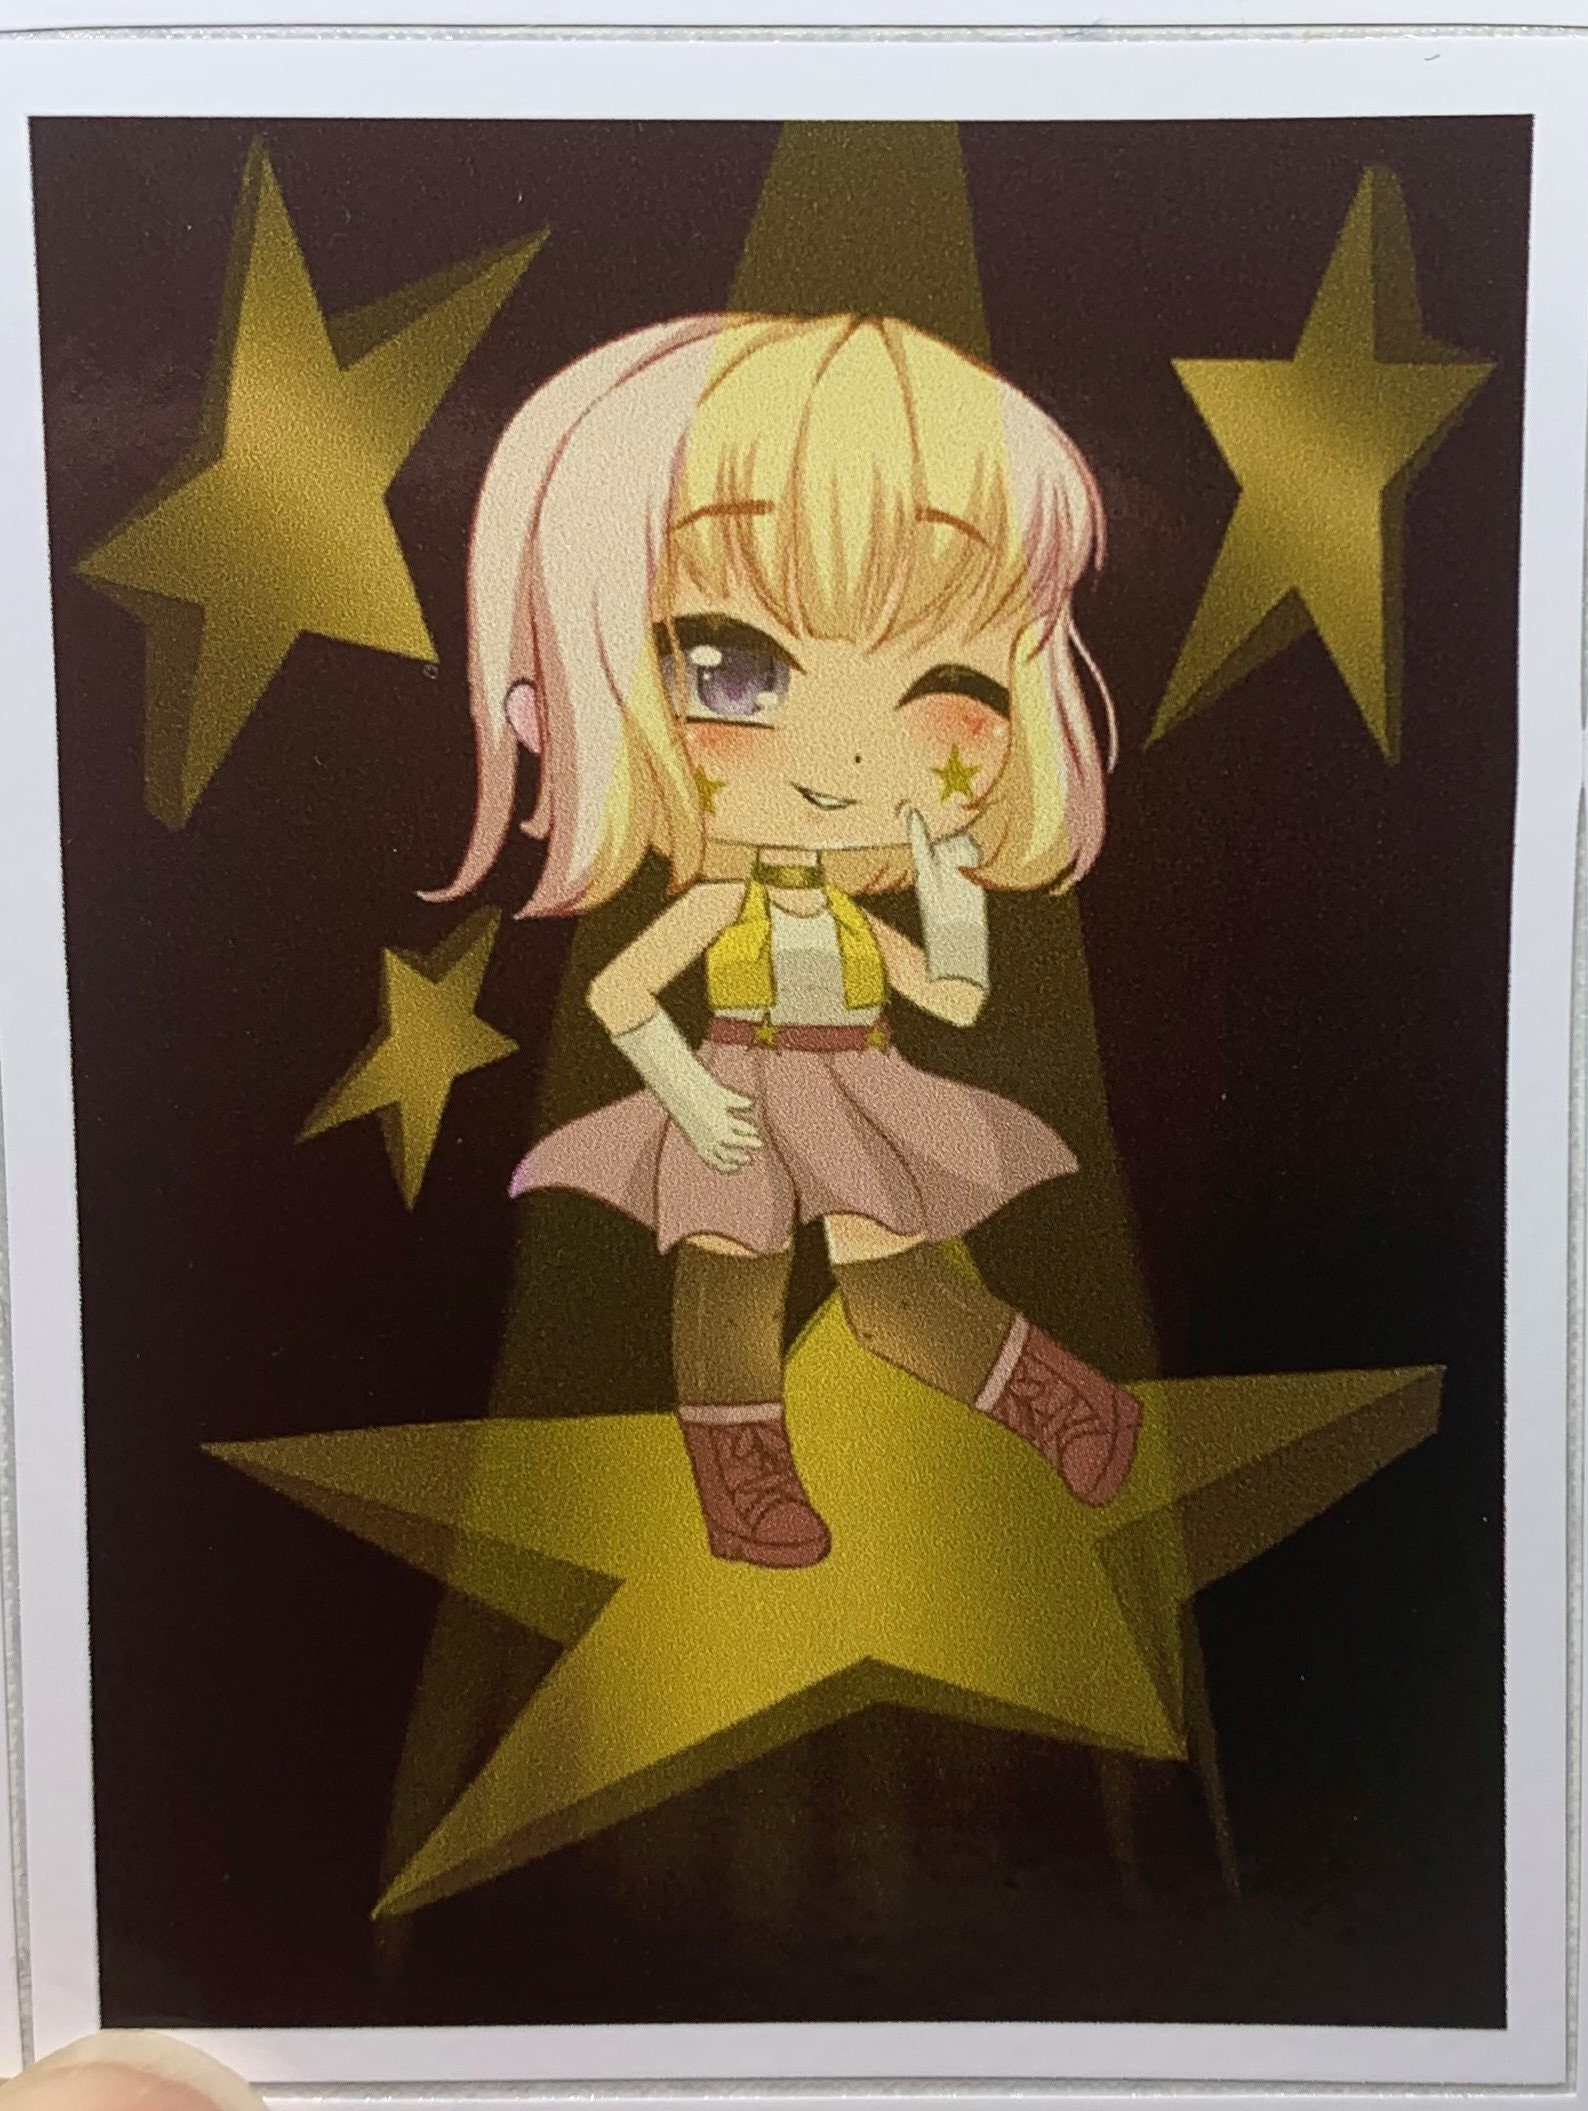 Gacha Super Star Girl Full Background - Gacha Life Art Vinyl Sticker